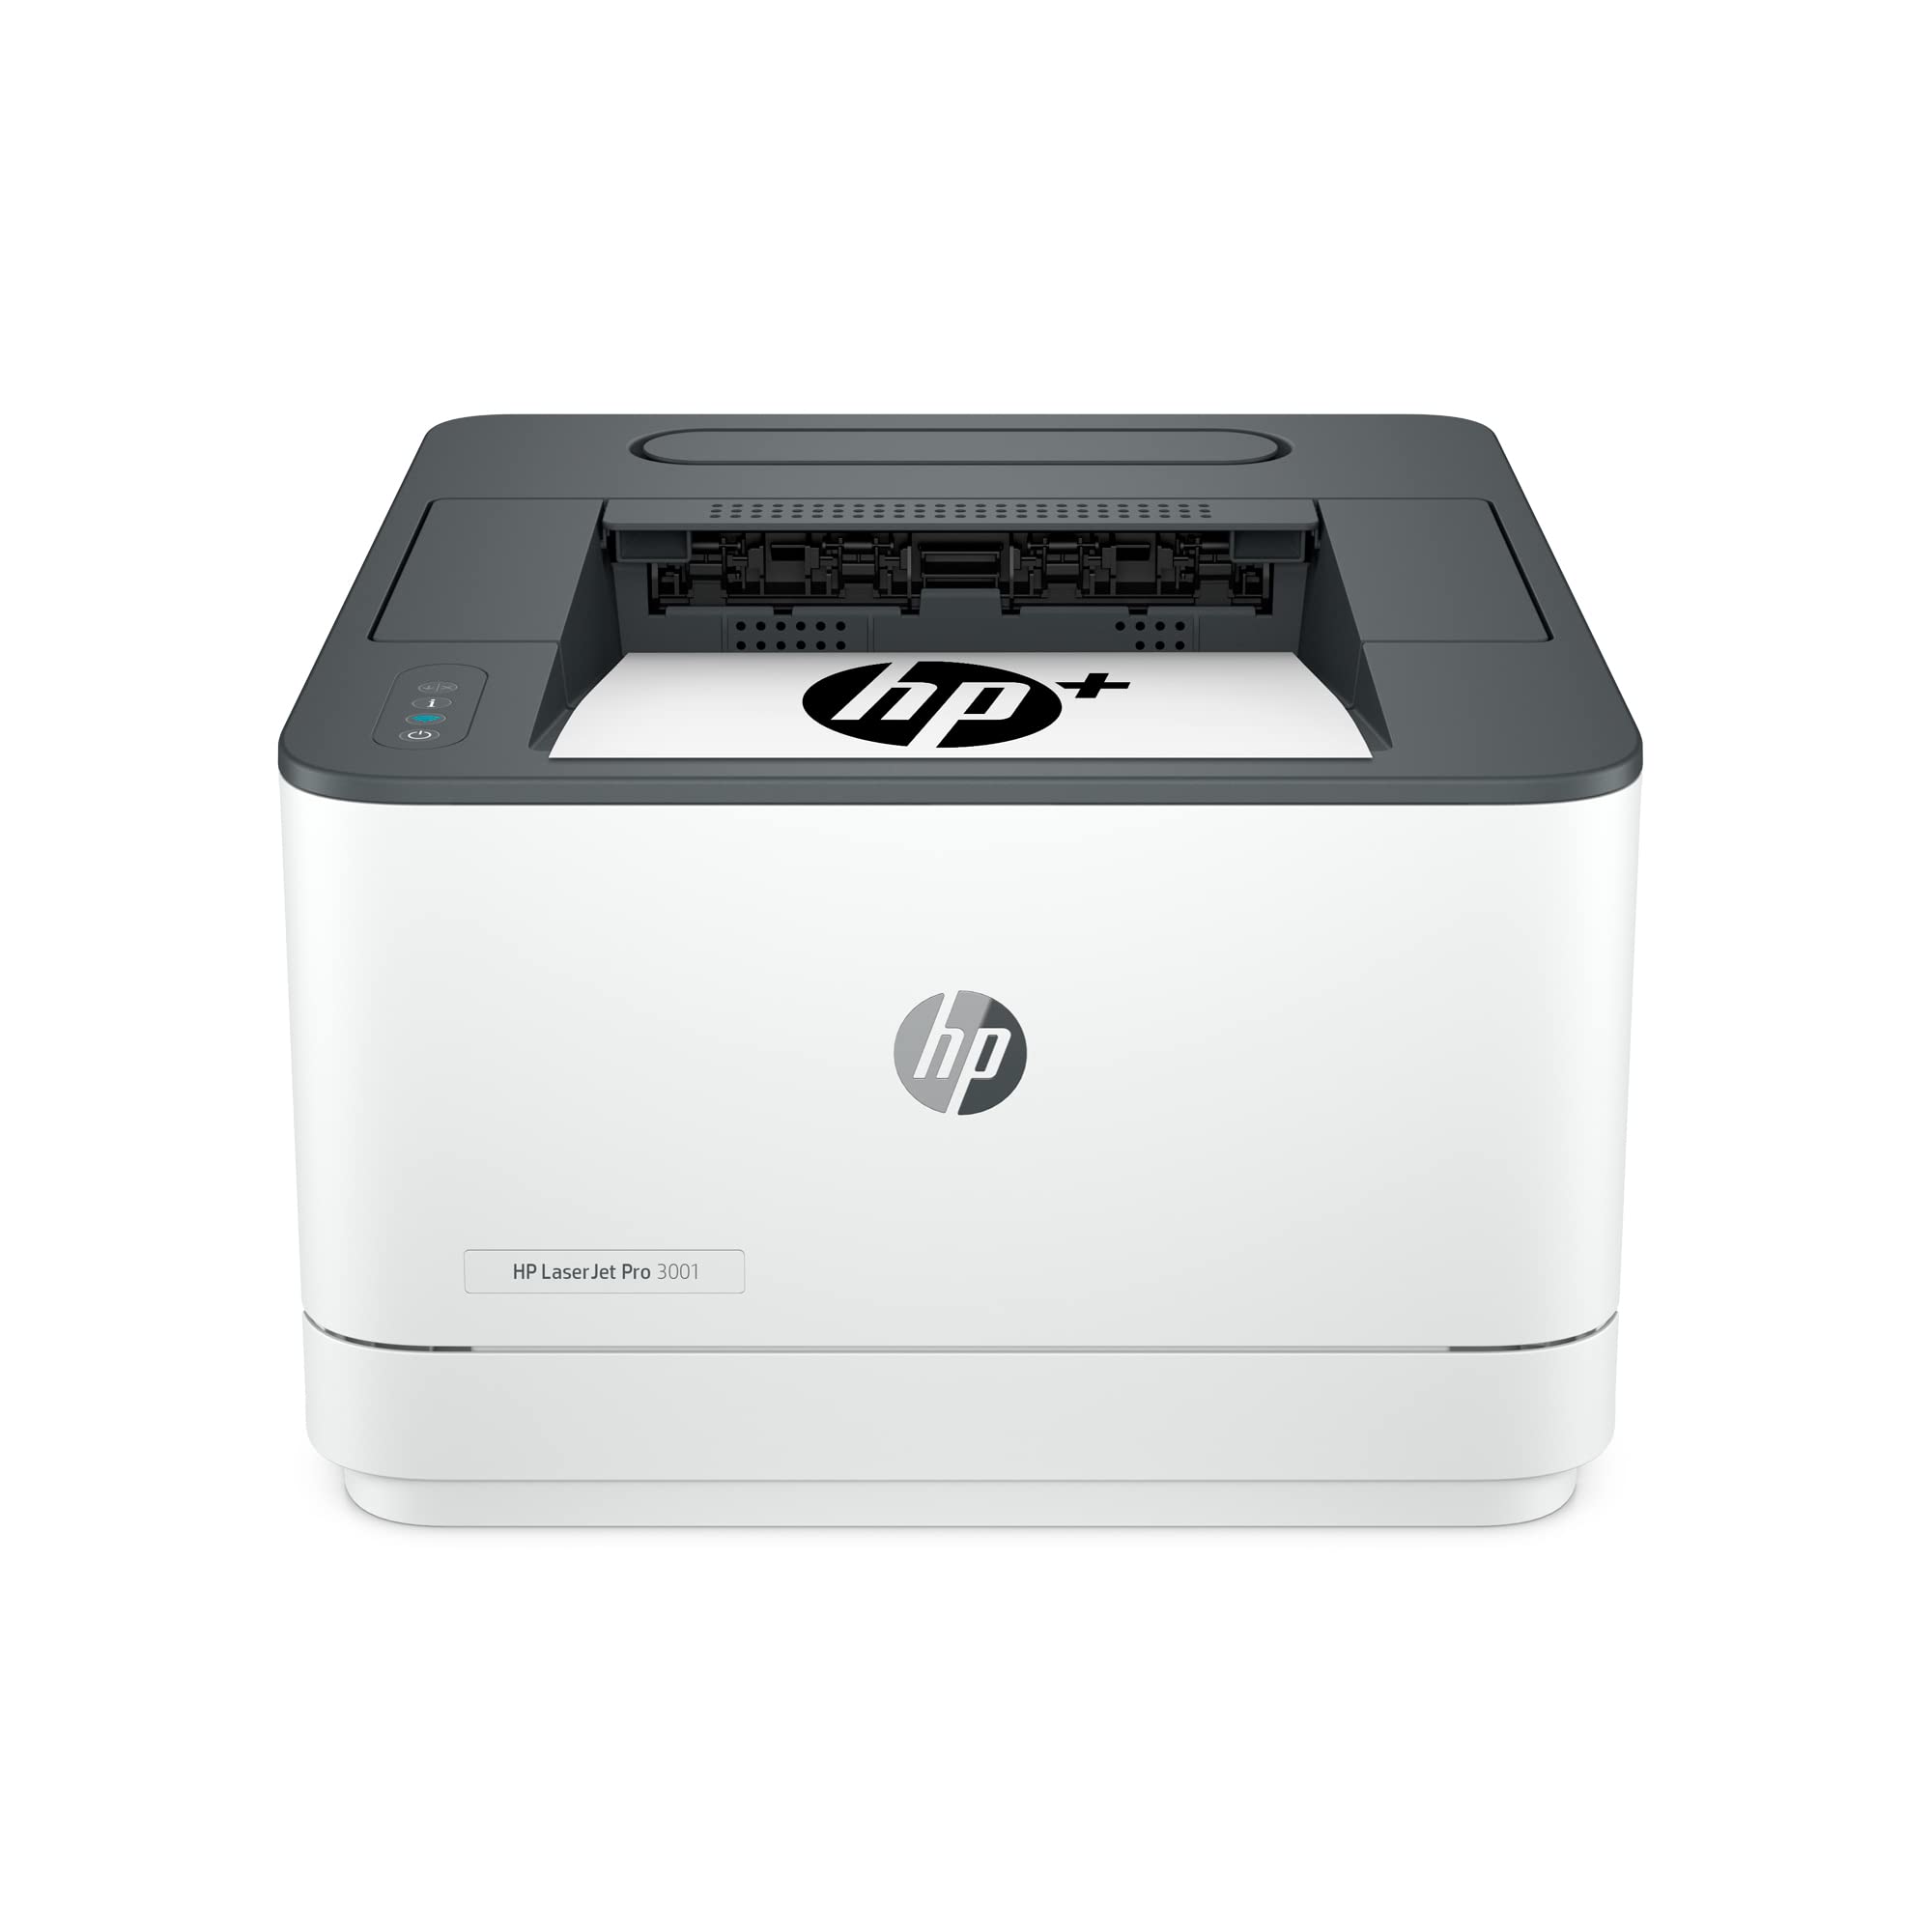 HP LaserJet Pro 3001dwe ワイヤレス白黒プリンター + スマート オフィス機能付き